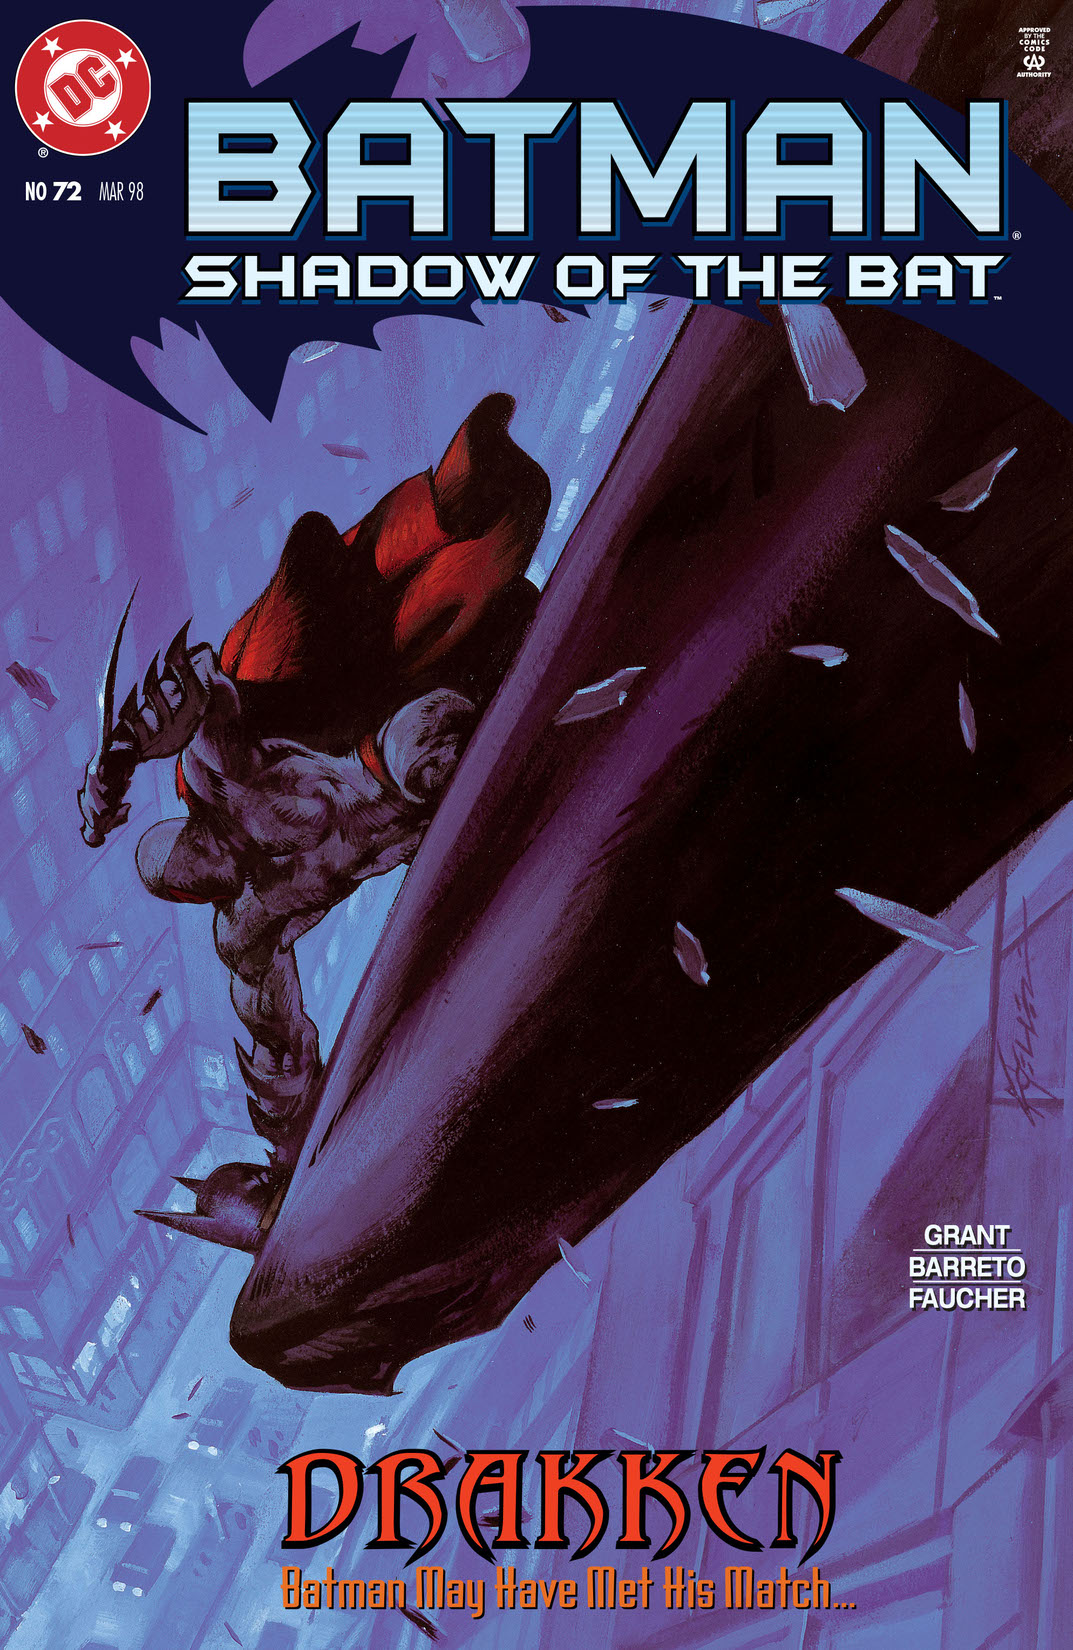 Batman: Shadow of the Bat #72 preview images